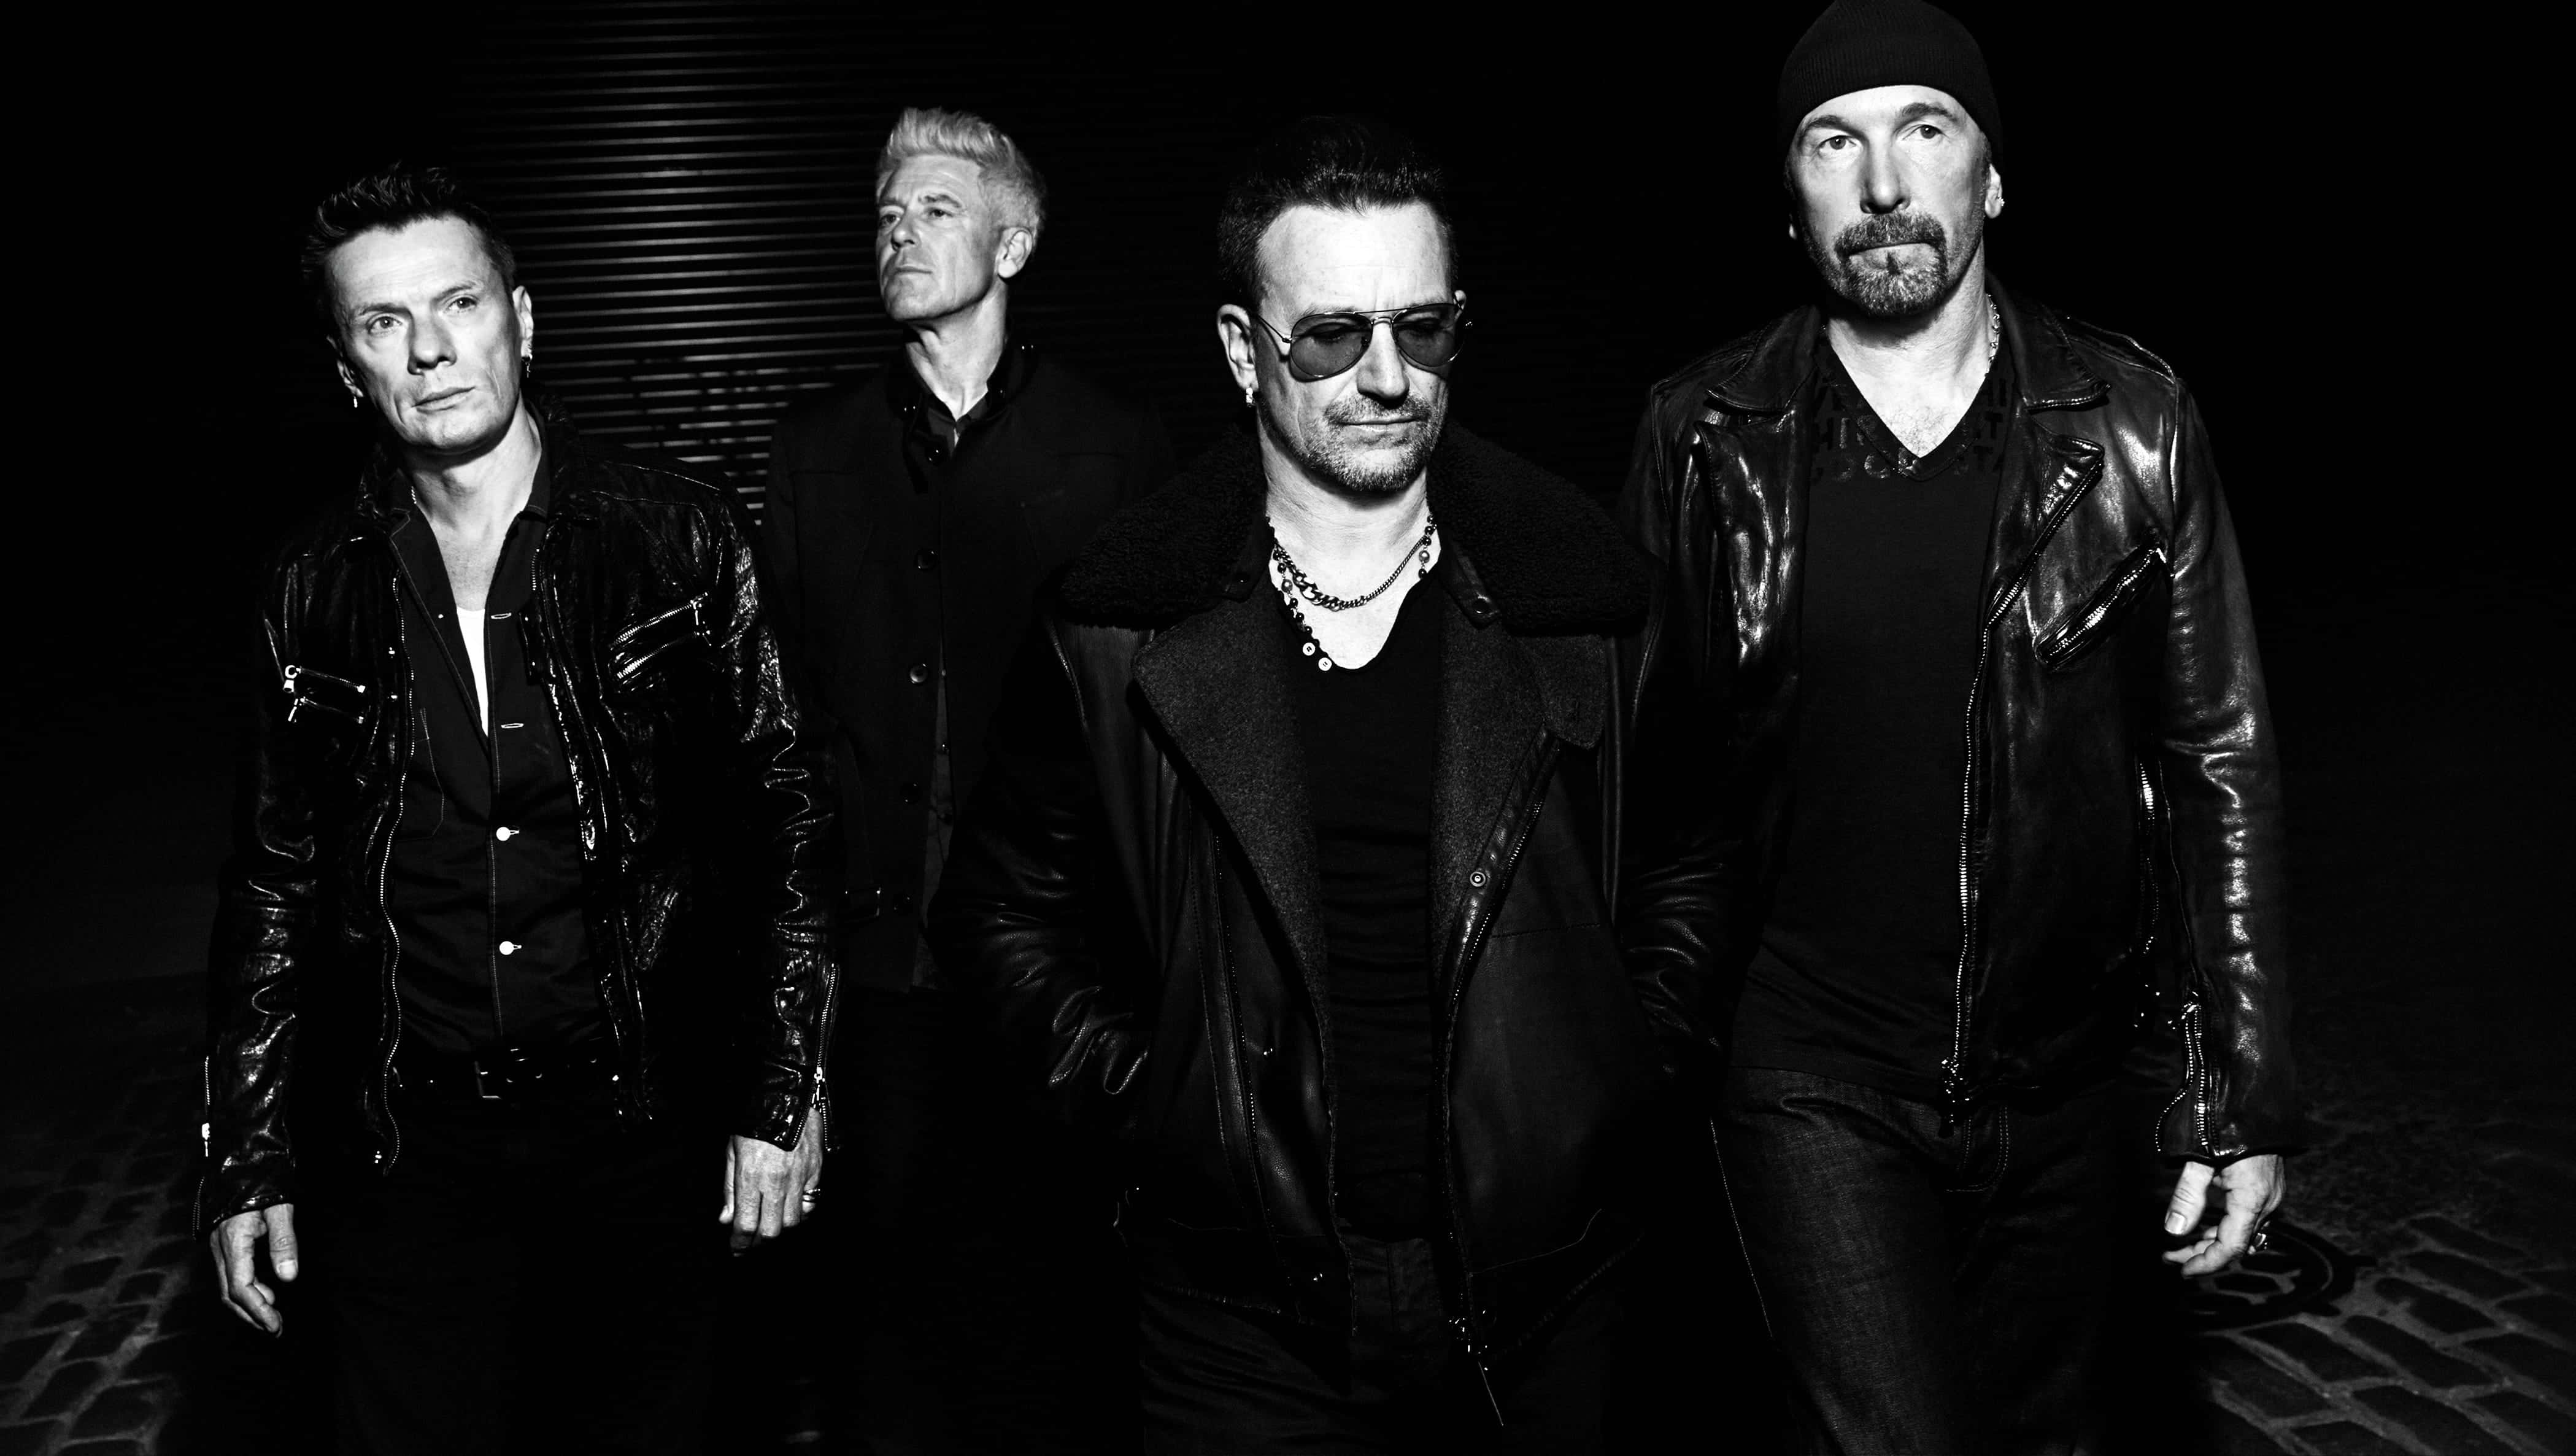 U2 Band Performing In A Concert Under Vibrant Lights Wallpaper